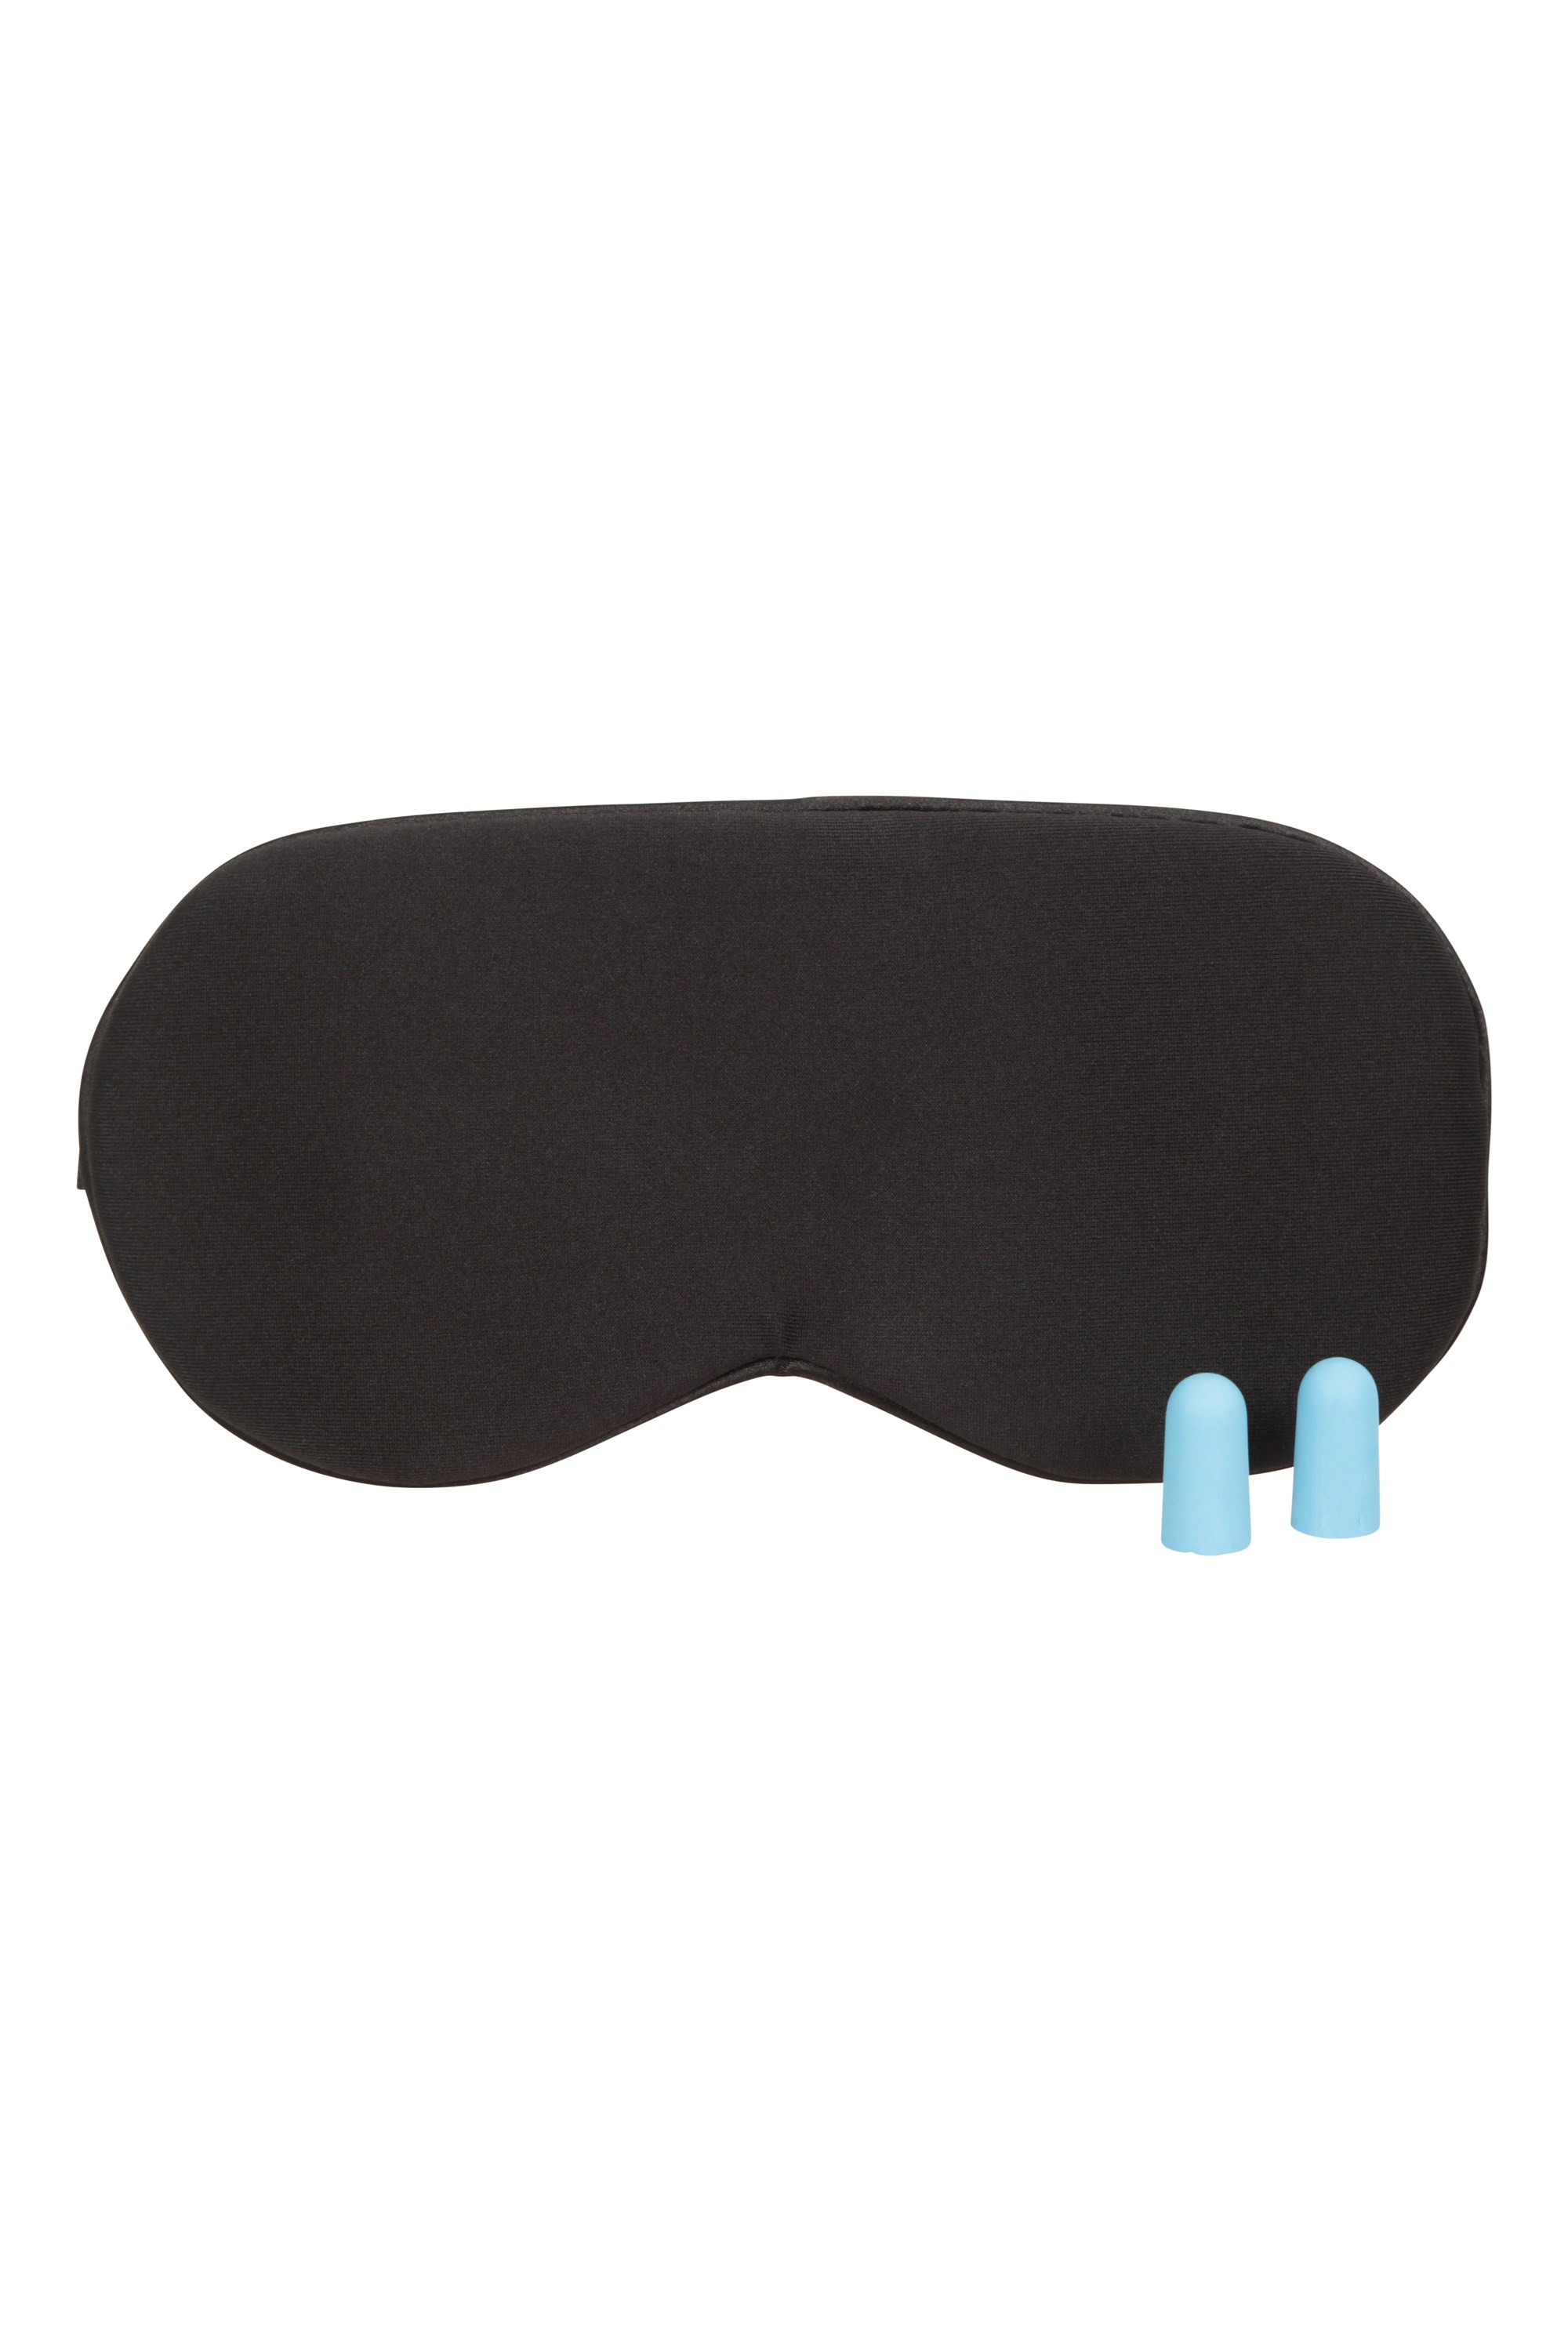 Sleeping Mask and Earplug Set - Black